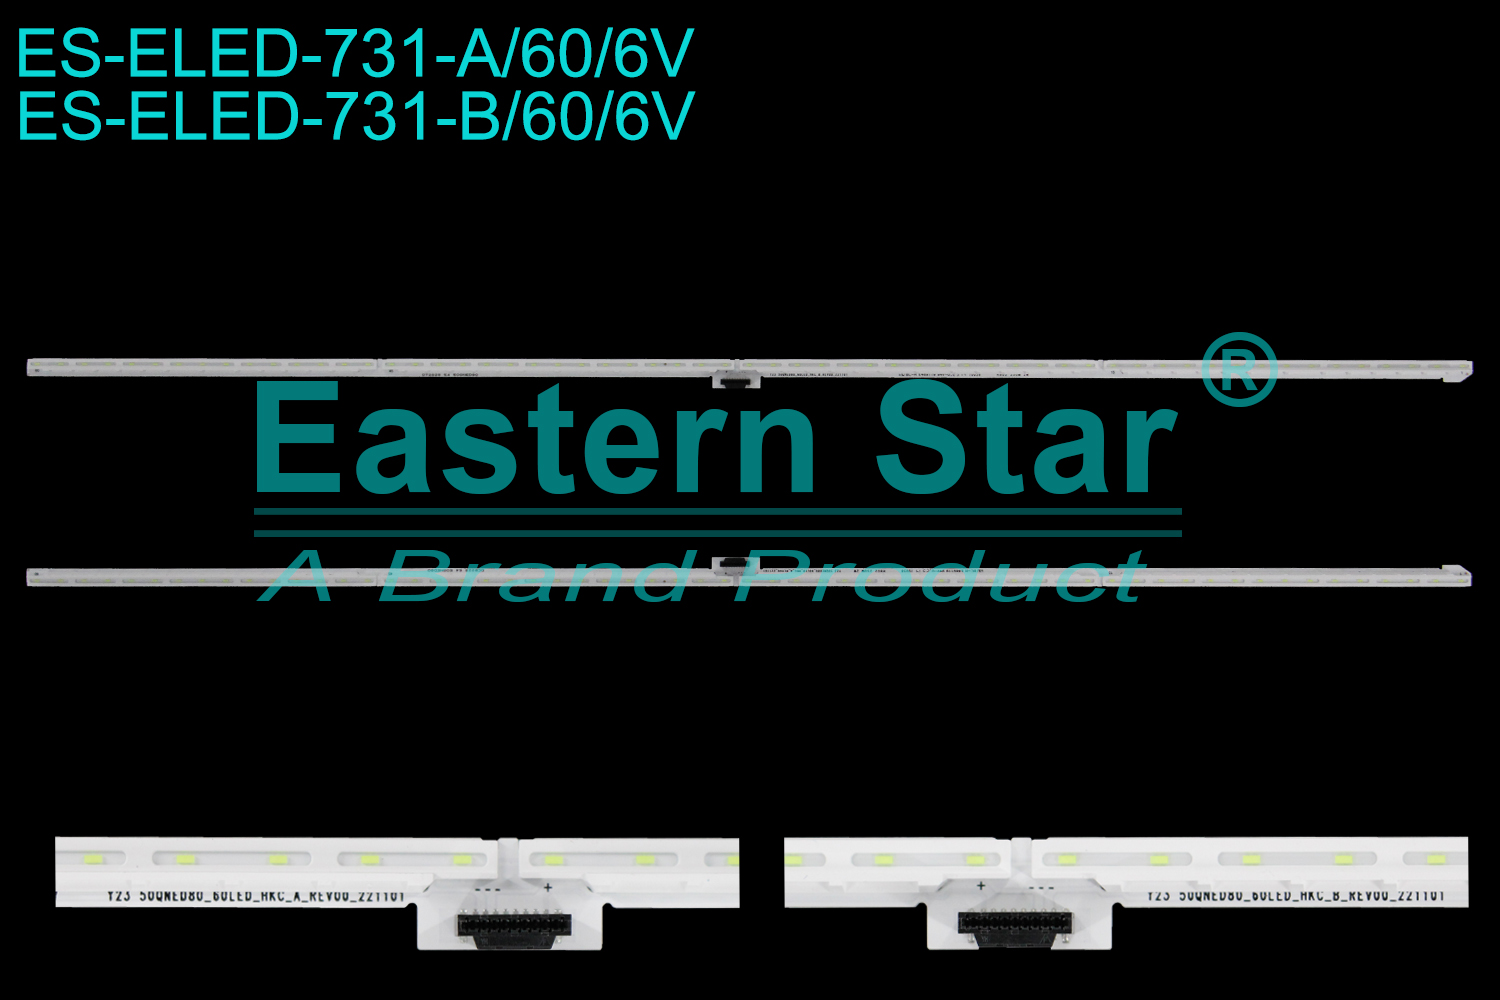 ES-ELED-731 ELED/EDGE TV backlight use for 50'' Lg A:10058 R802 25UM 2W Y23 50QNED80_60LED_HKC_A_REV00_221101 DCB228 64 50QNED80  B:10059 R802 25UM 2W Y23 50QNED80_60LED_HKC_B_REV00_221101 DT2828 54 50QNED80 LED STRIPS(/)